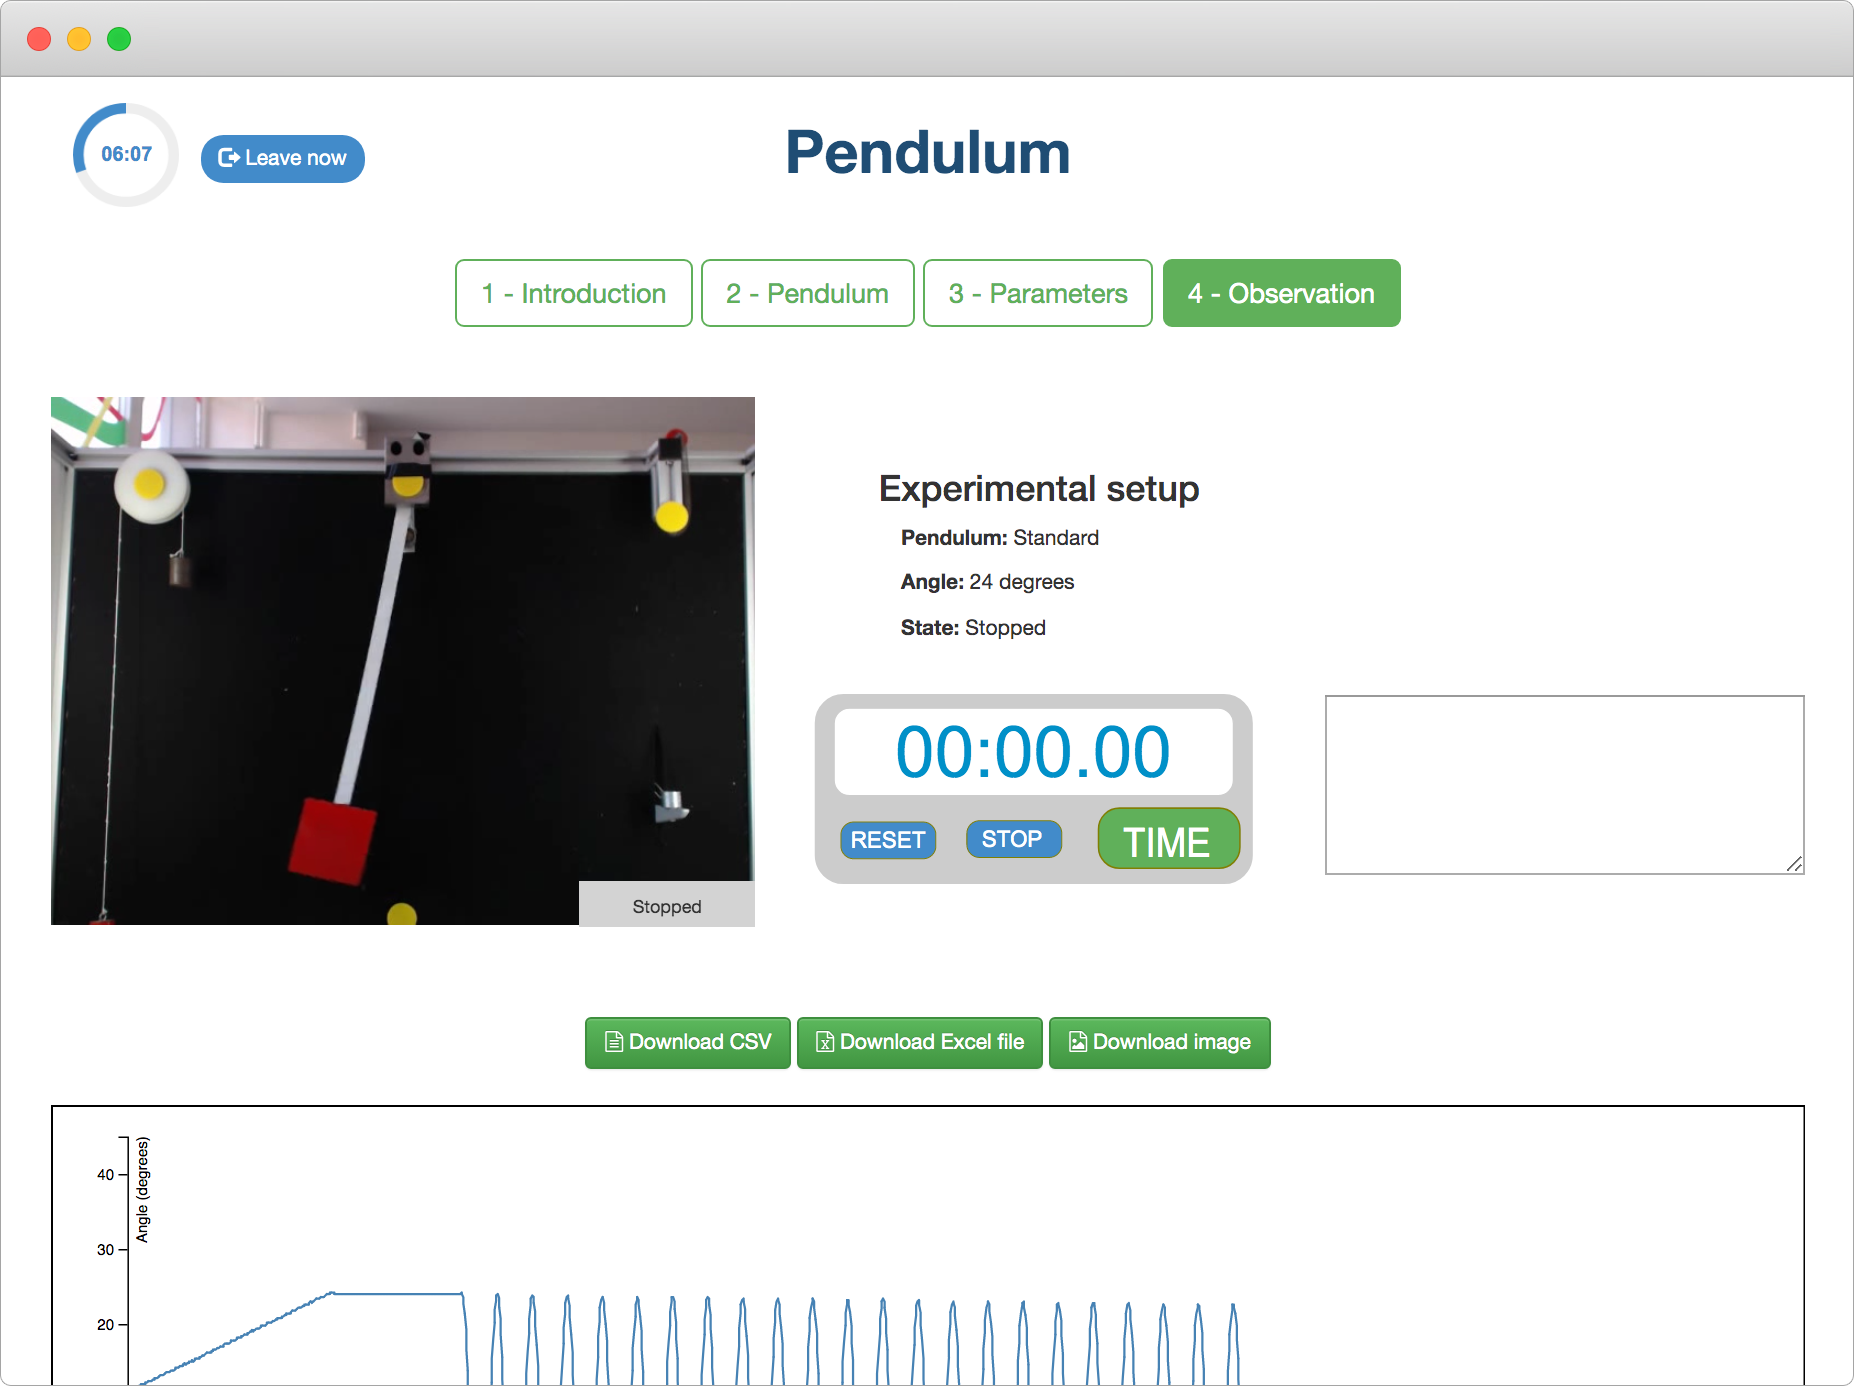 The new pendulum remote laboratory